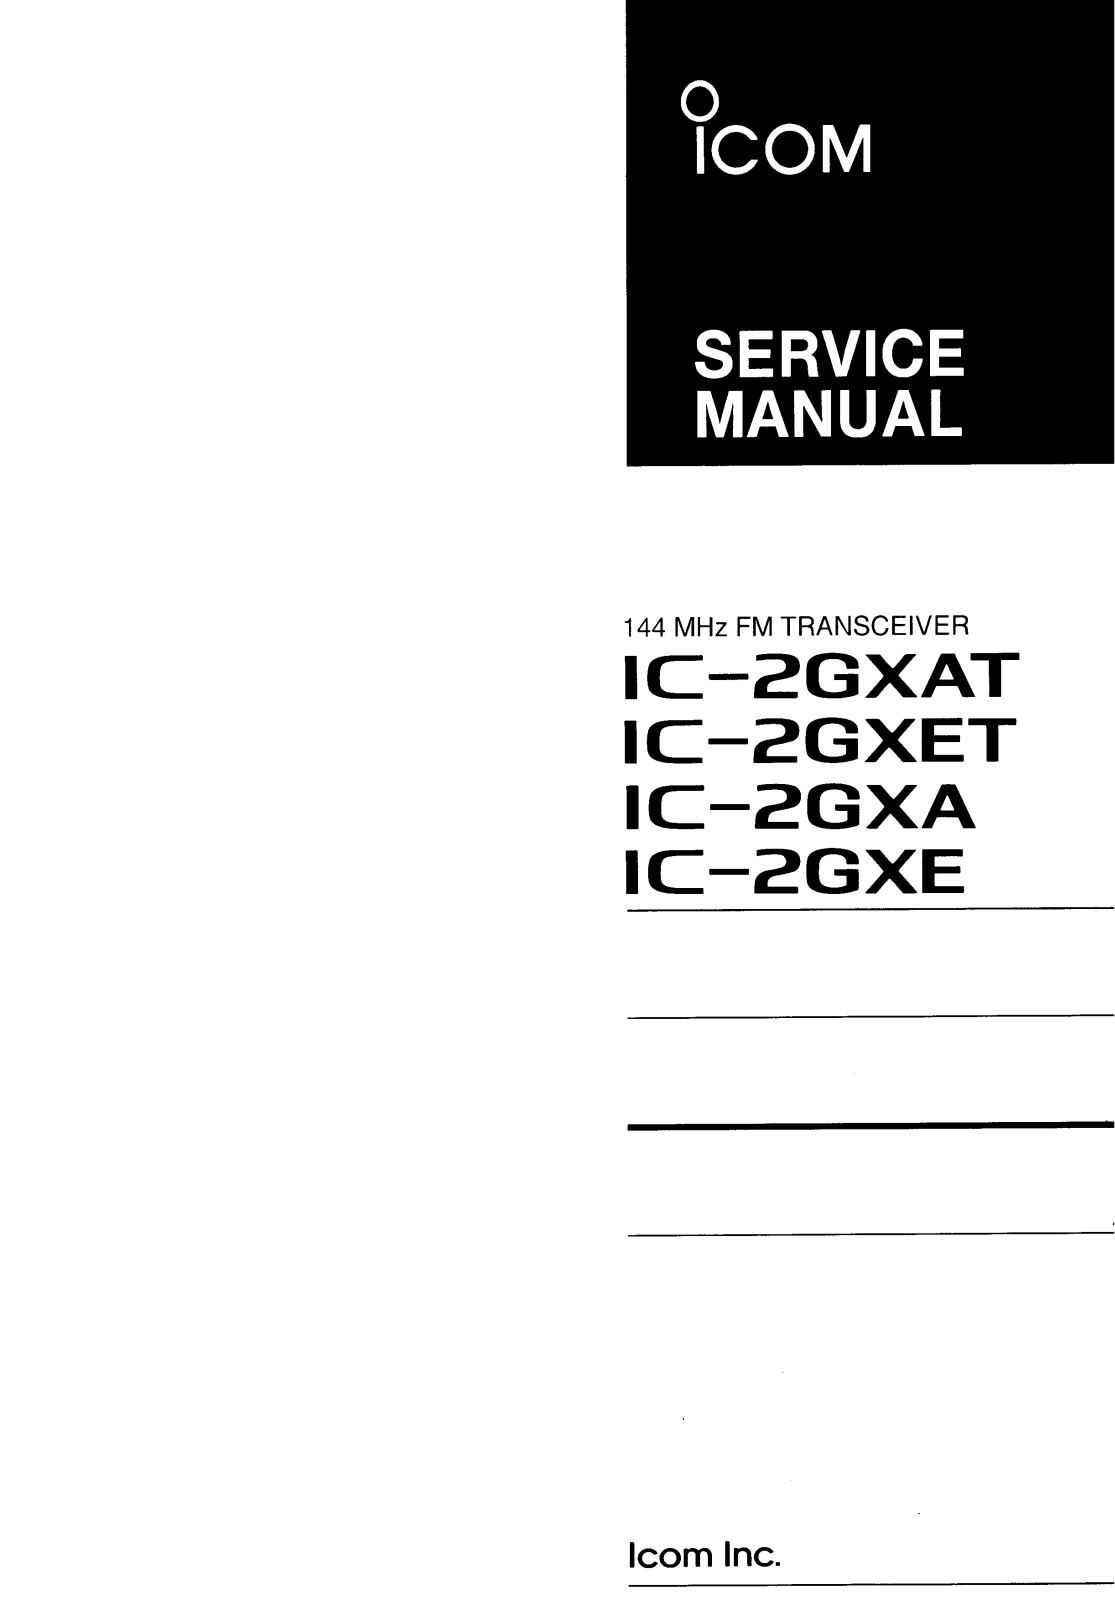 Icom IC-2GXE, IC-2GXA, IC-2GXET, IC-2GXAT Service Manual